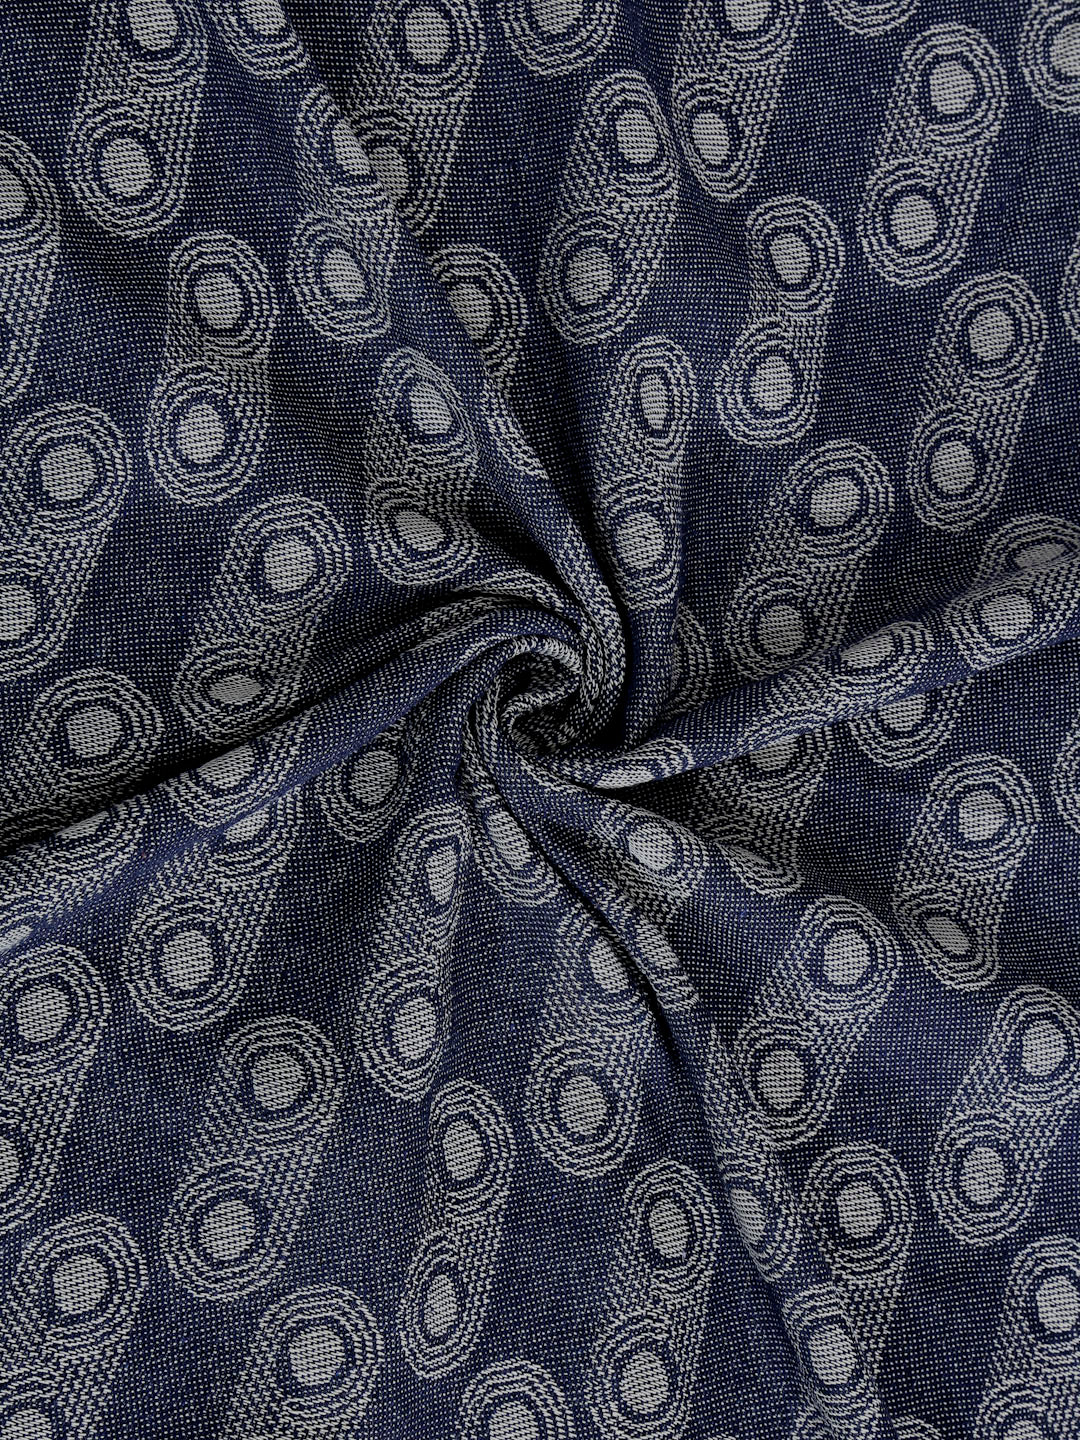 Arrabi Black Graphic Handwoven Cotton Single Size Bedsheet with 1 Pillow Cover ( 225 X 150 cm)